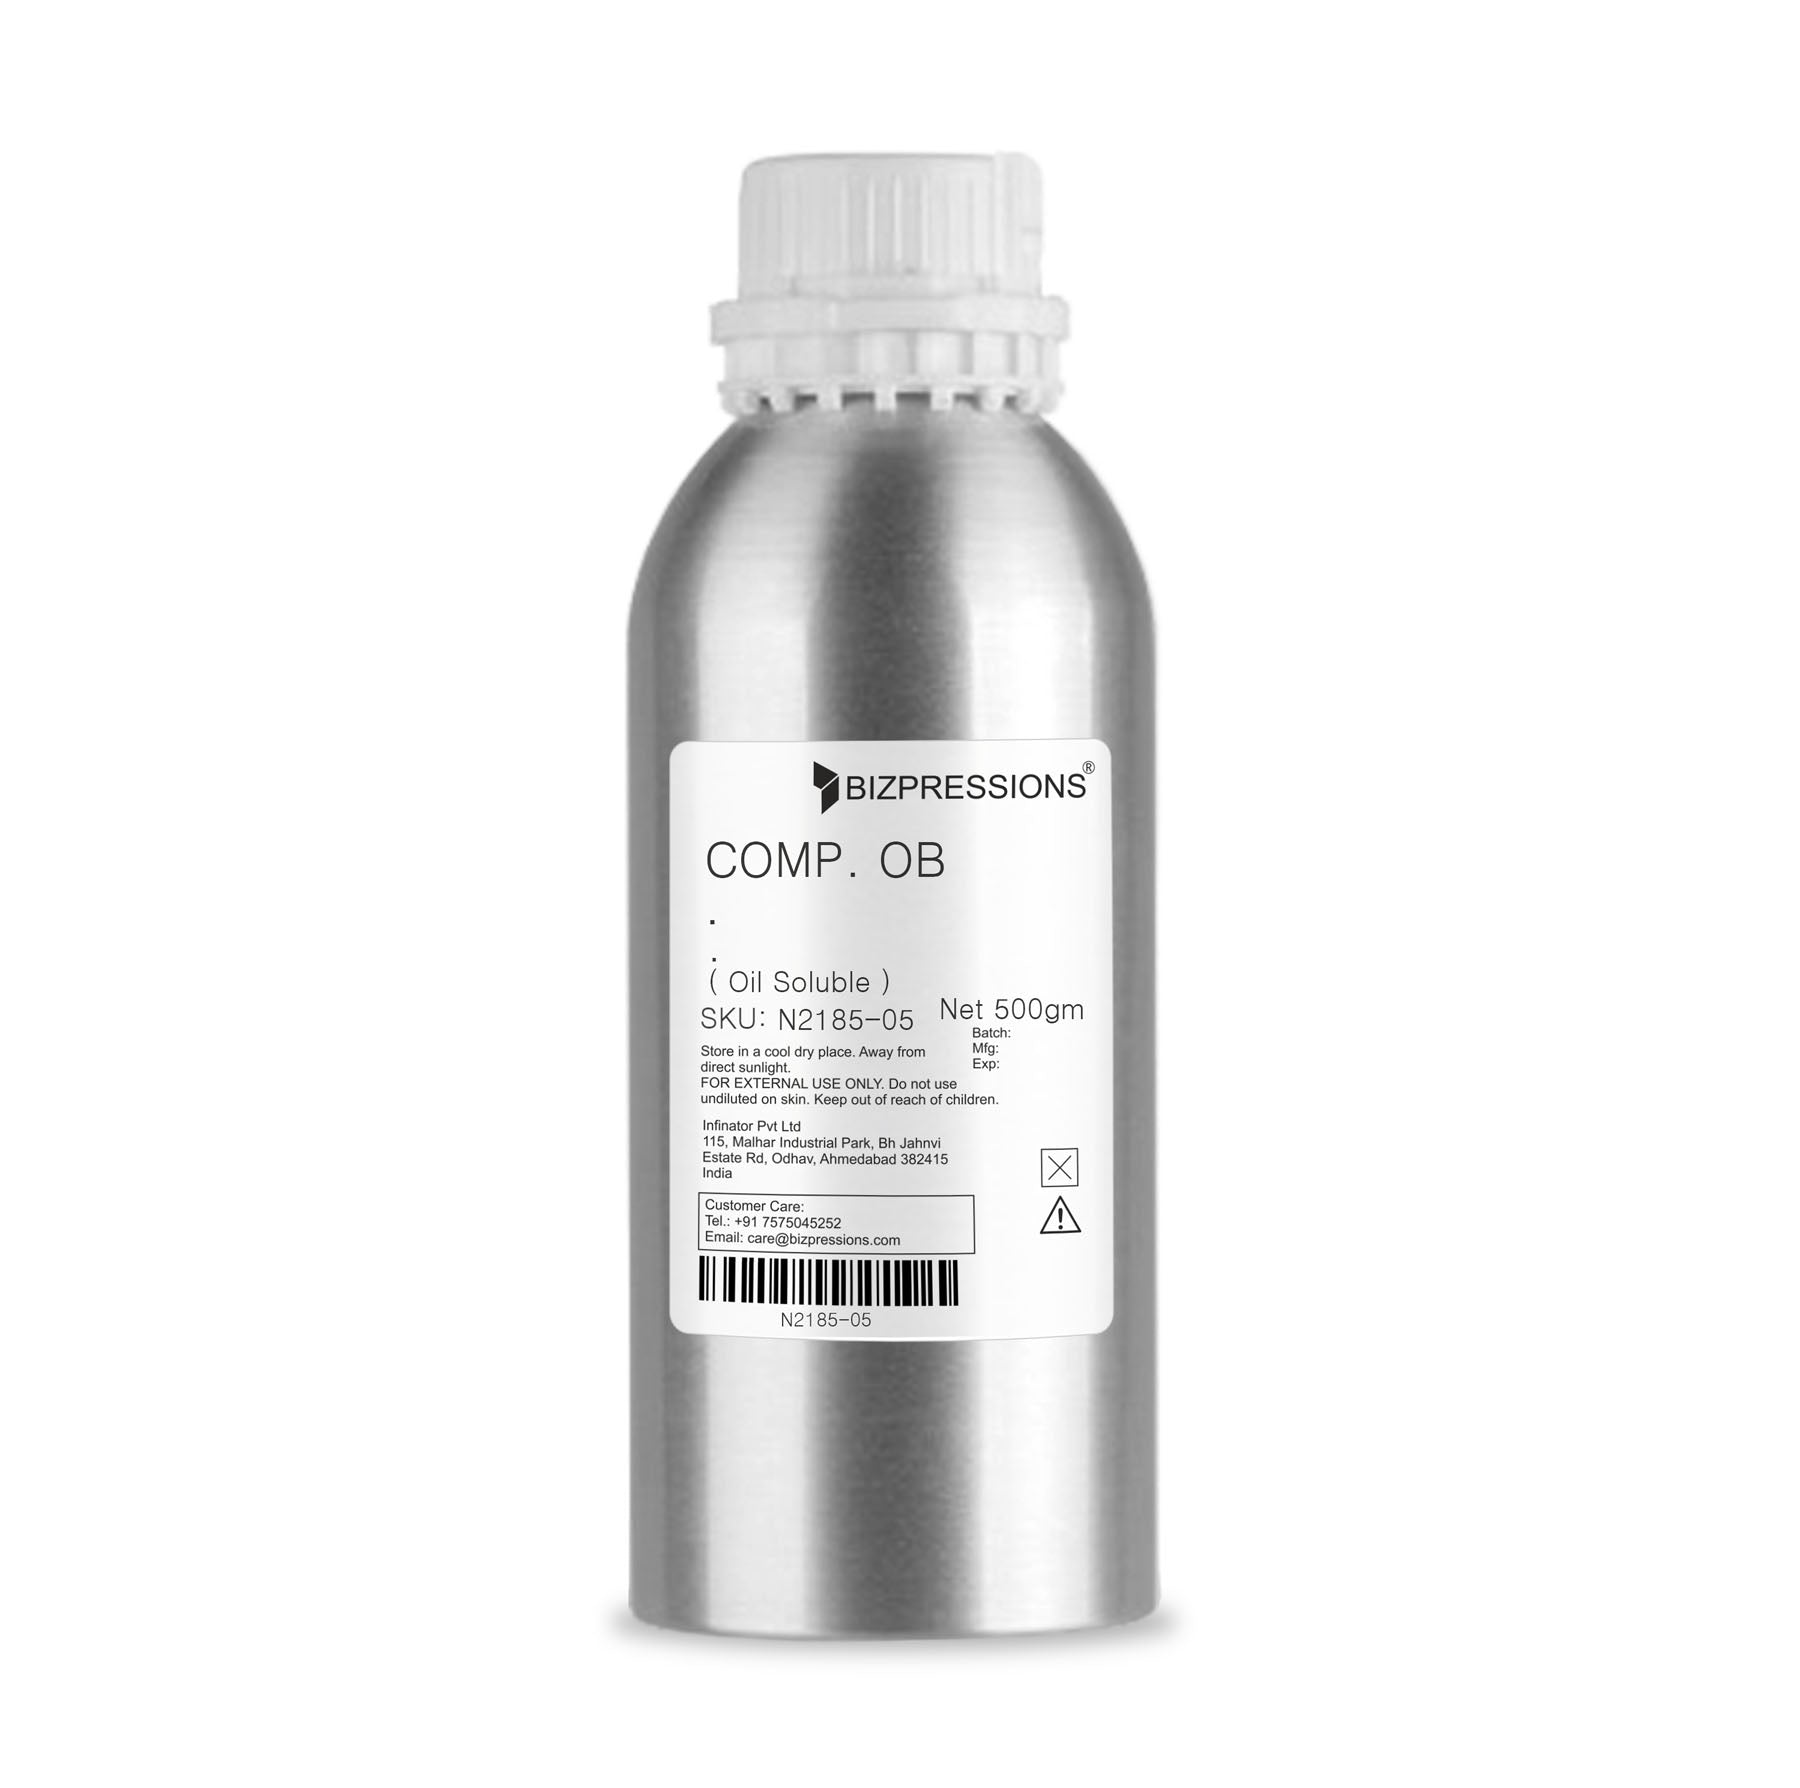 COMP. OB - Fragrance ( Oil Soluble ) - 500 gm